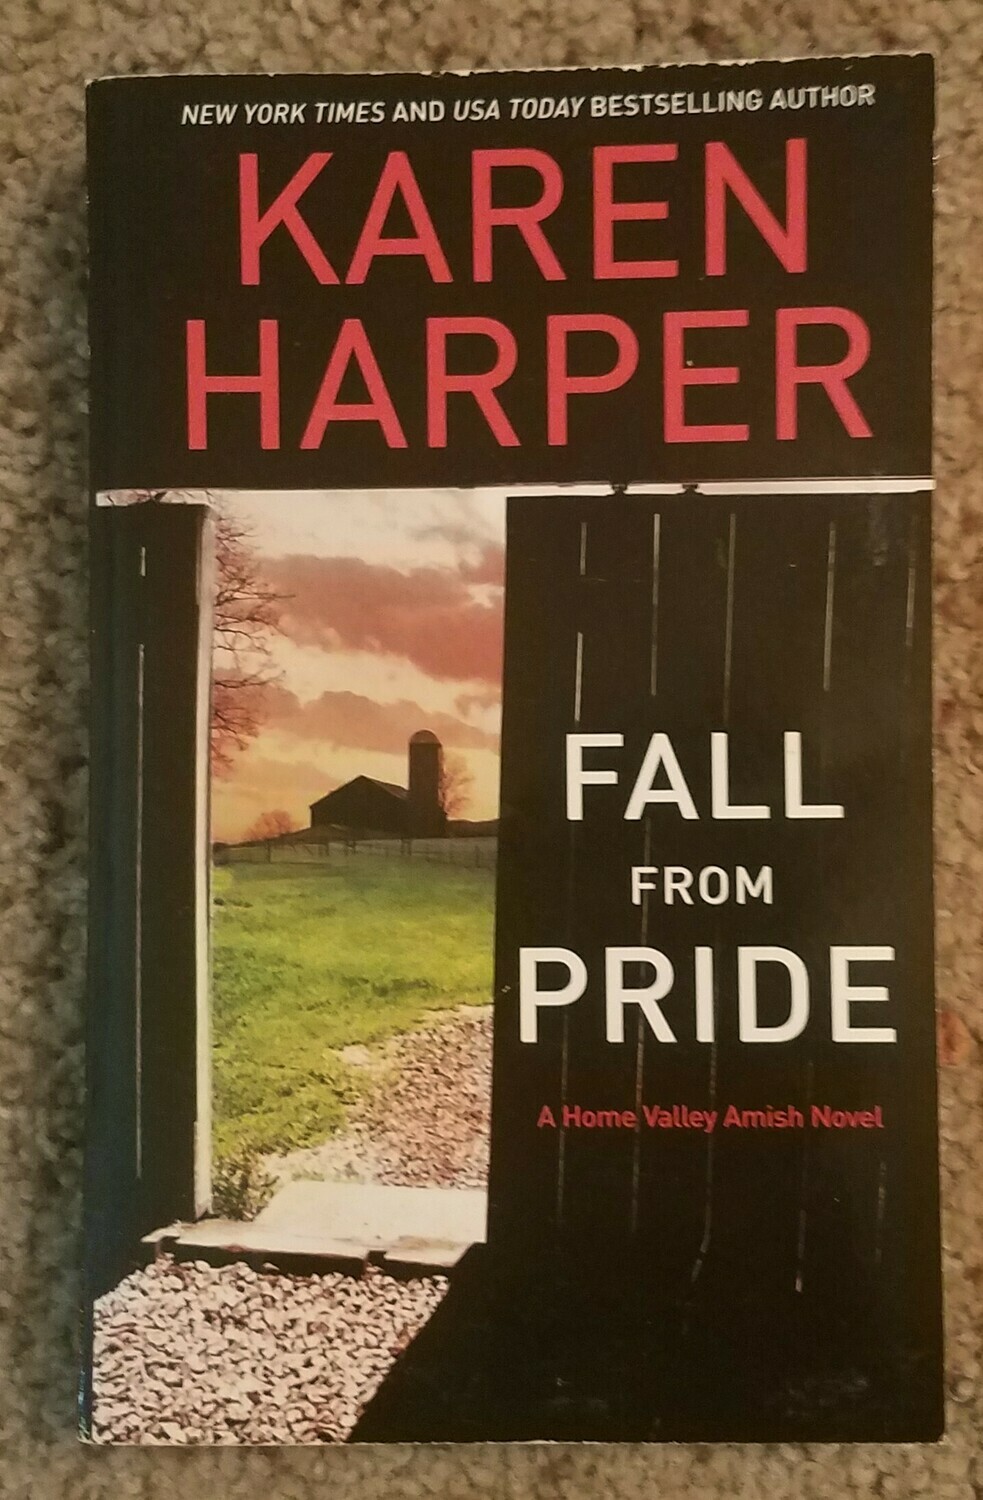 Fall from Pride by Karen Harper